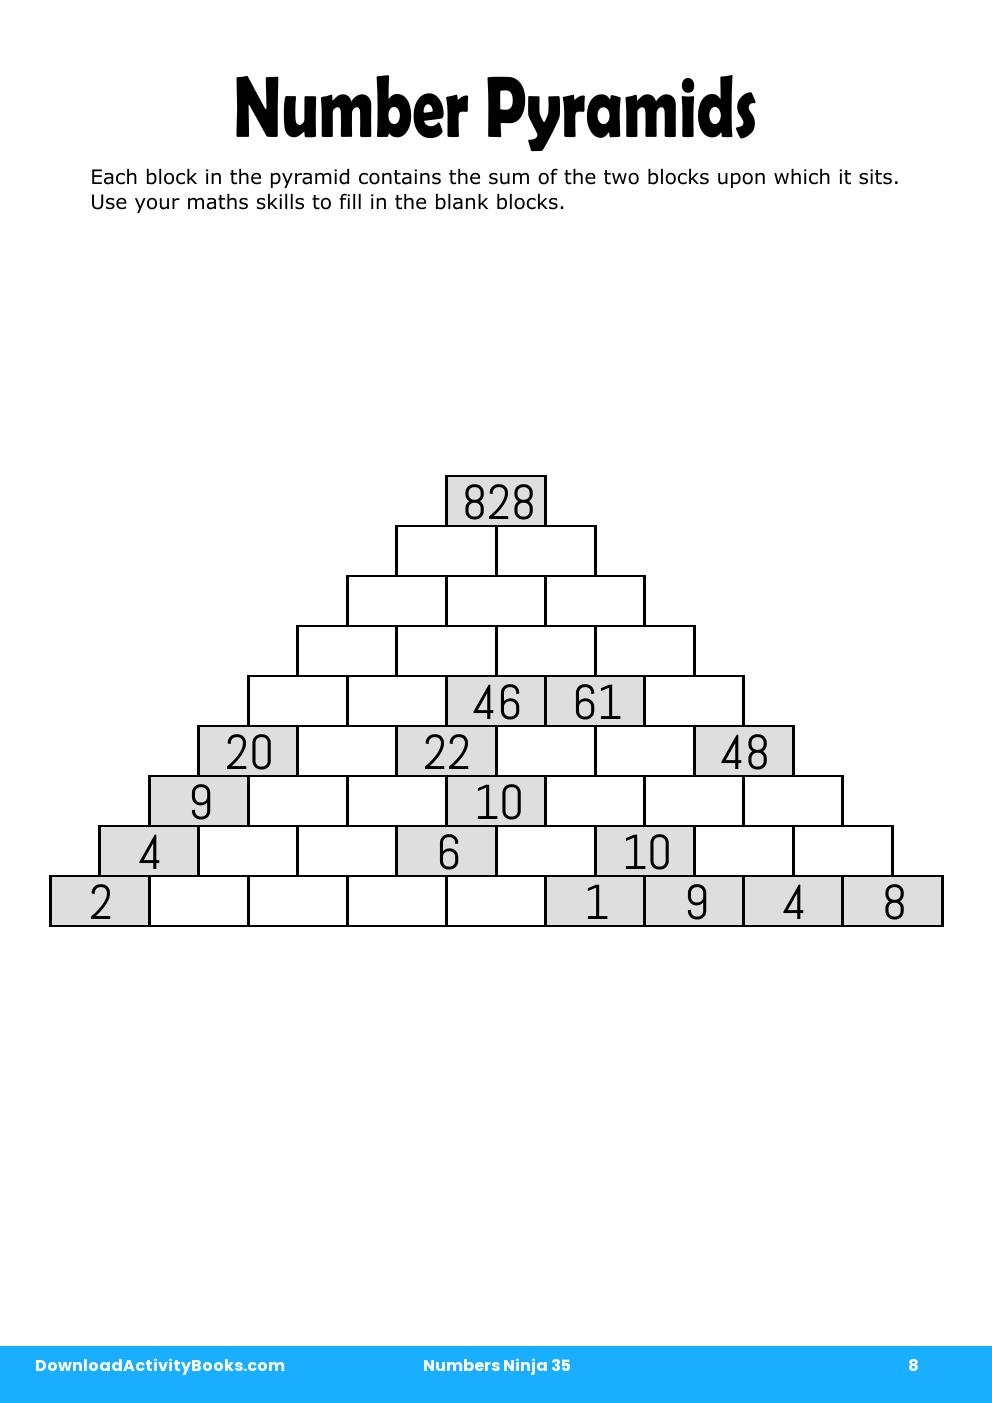 Number Pyramids in Numbers Ninja 35